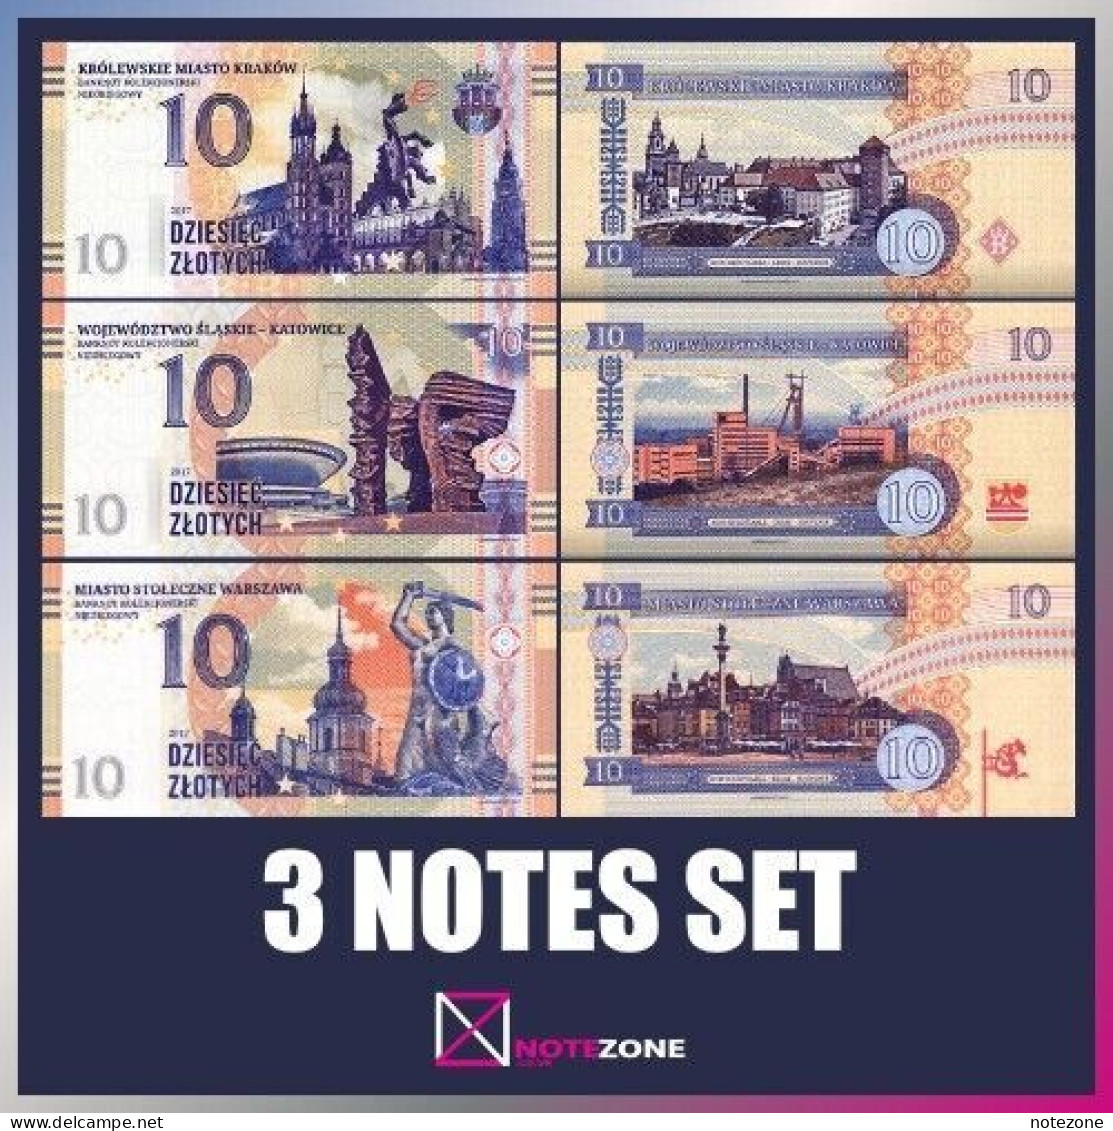 3 Notes Set! Matej Gabris 10 Złotych 2017 Poland Paper Fantasy Banknote - Poland